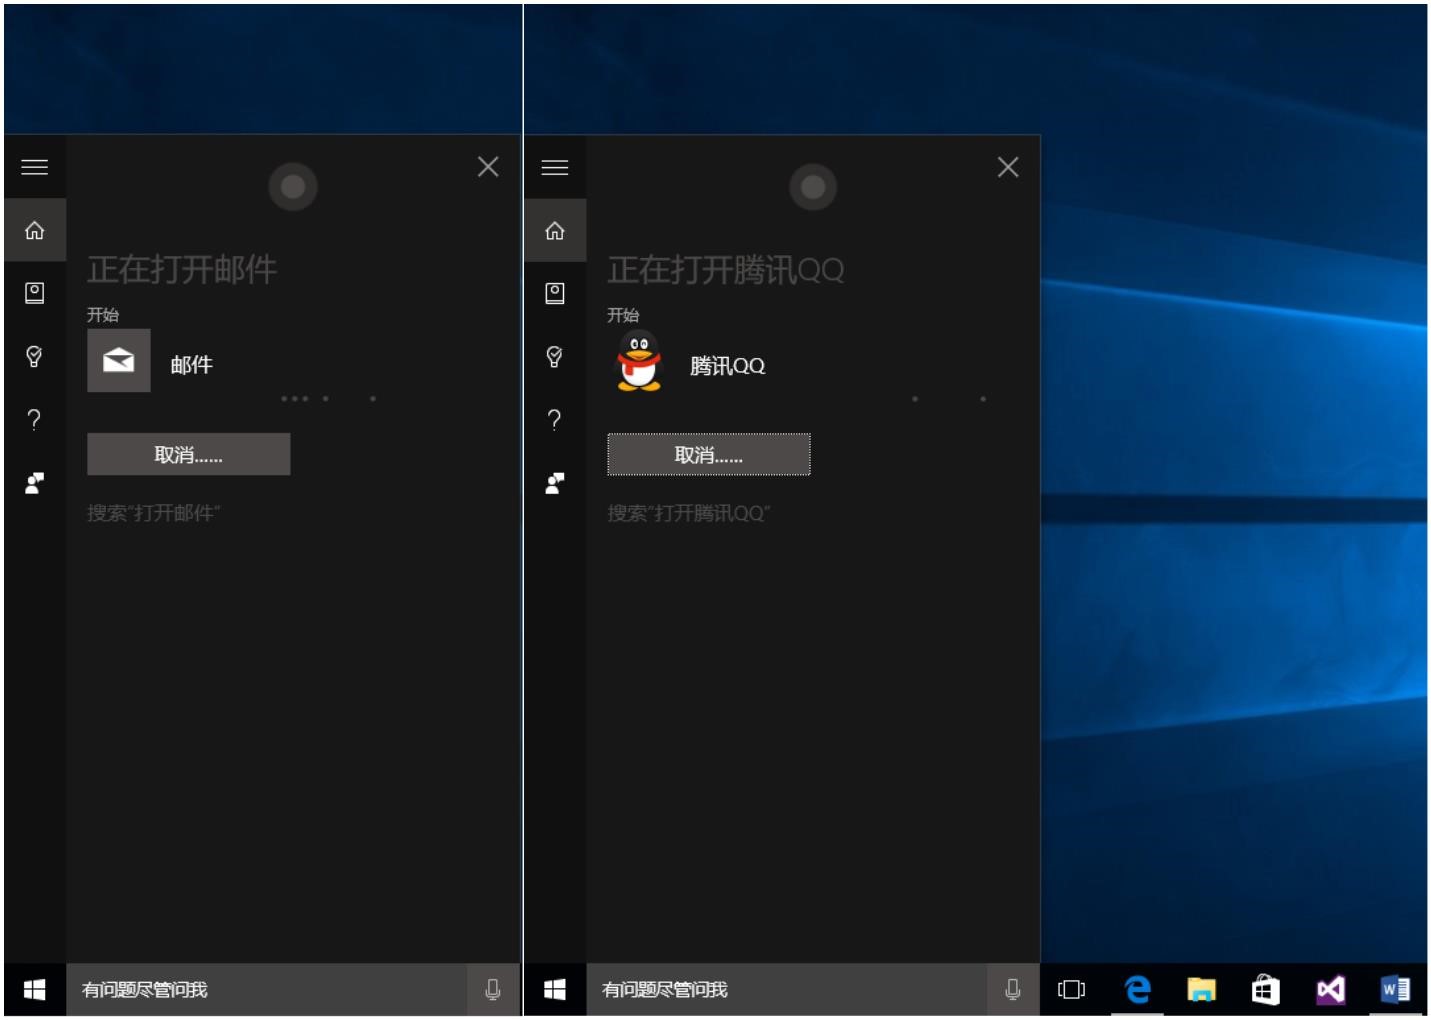 Windows10用户手册 - Windows 10 功能使用 - Cortana与搜索